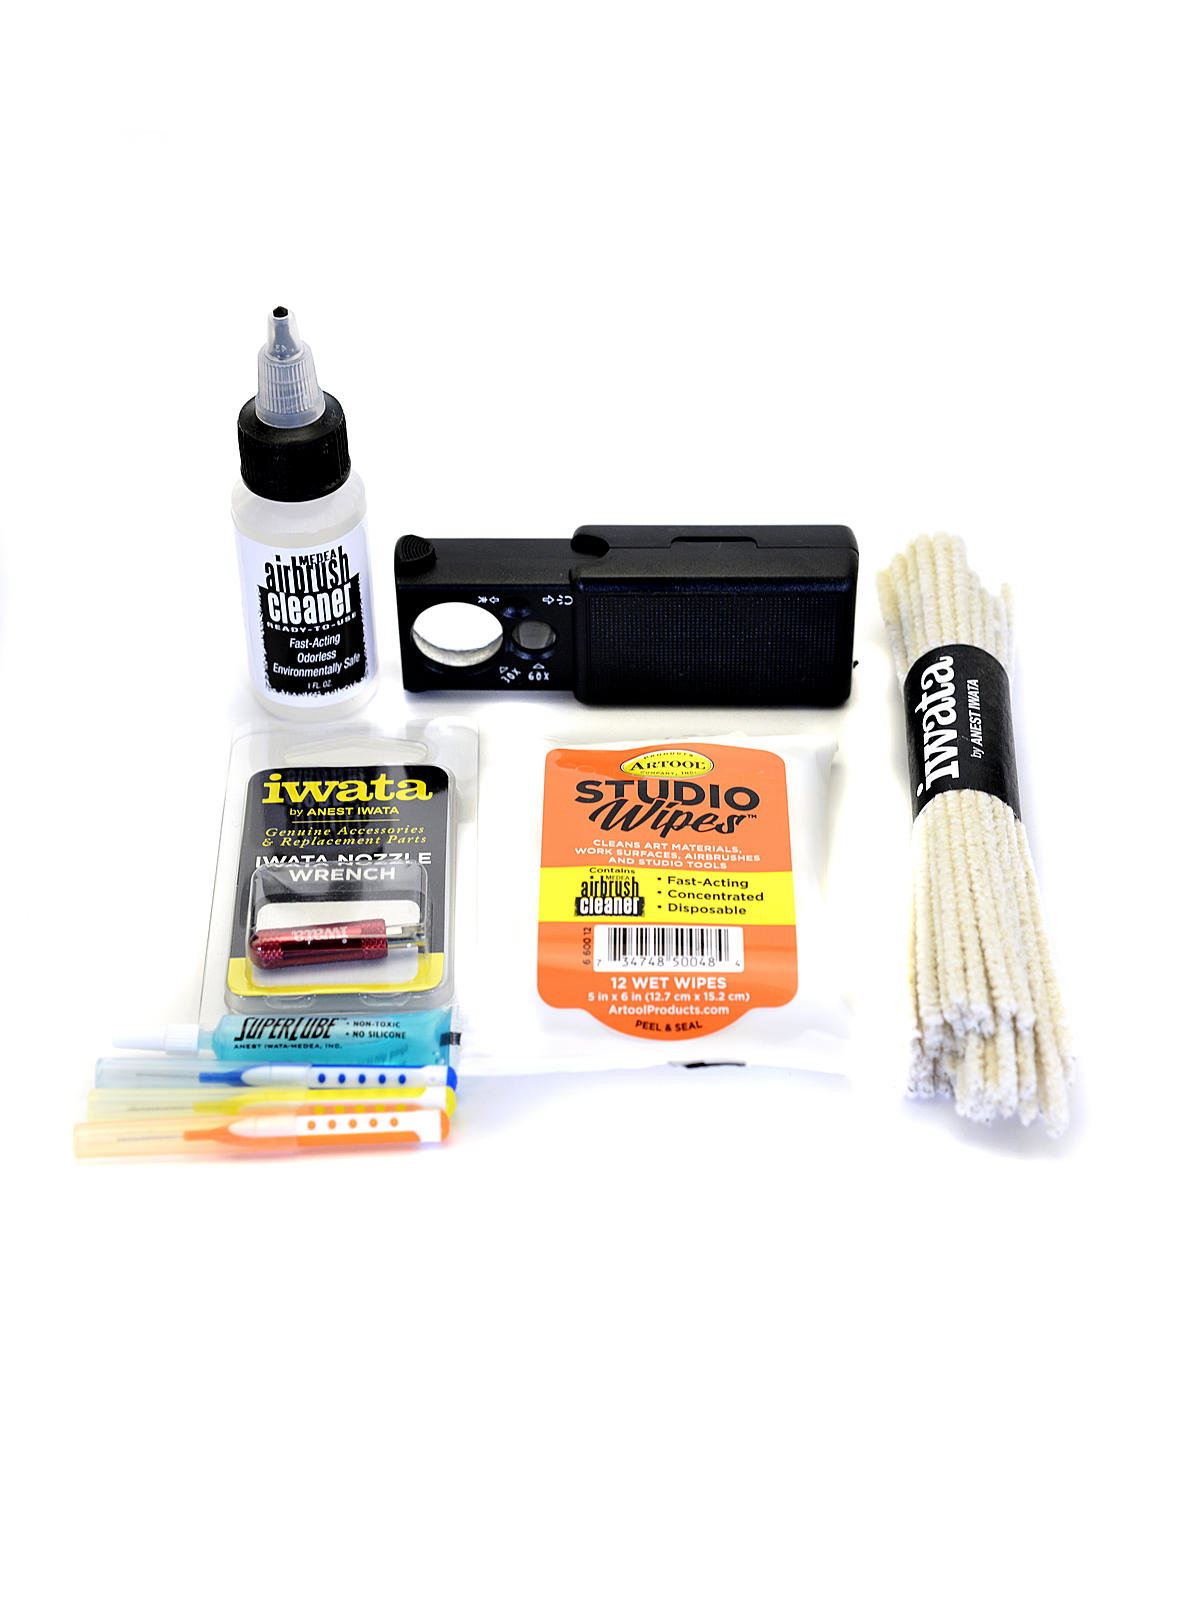 Iwata Airbrush Cleaning Kit: Anest Iwata-Medea, Inc.